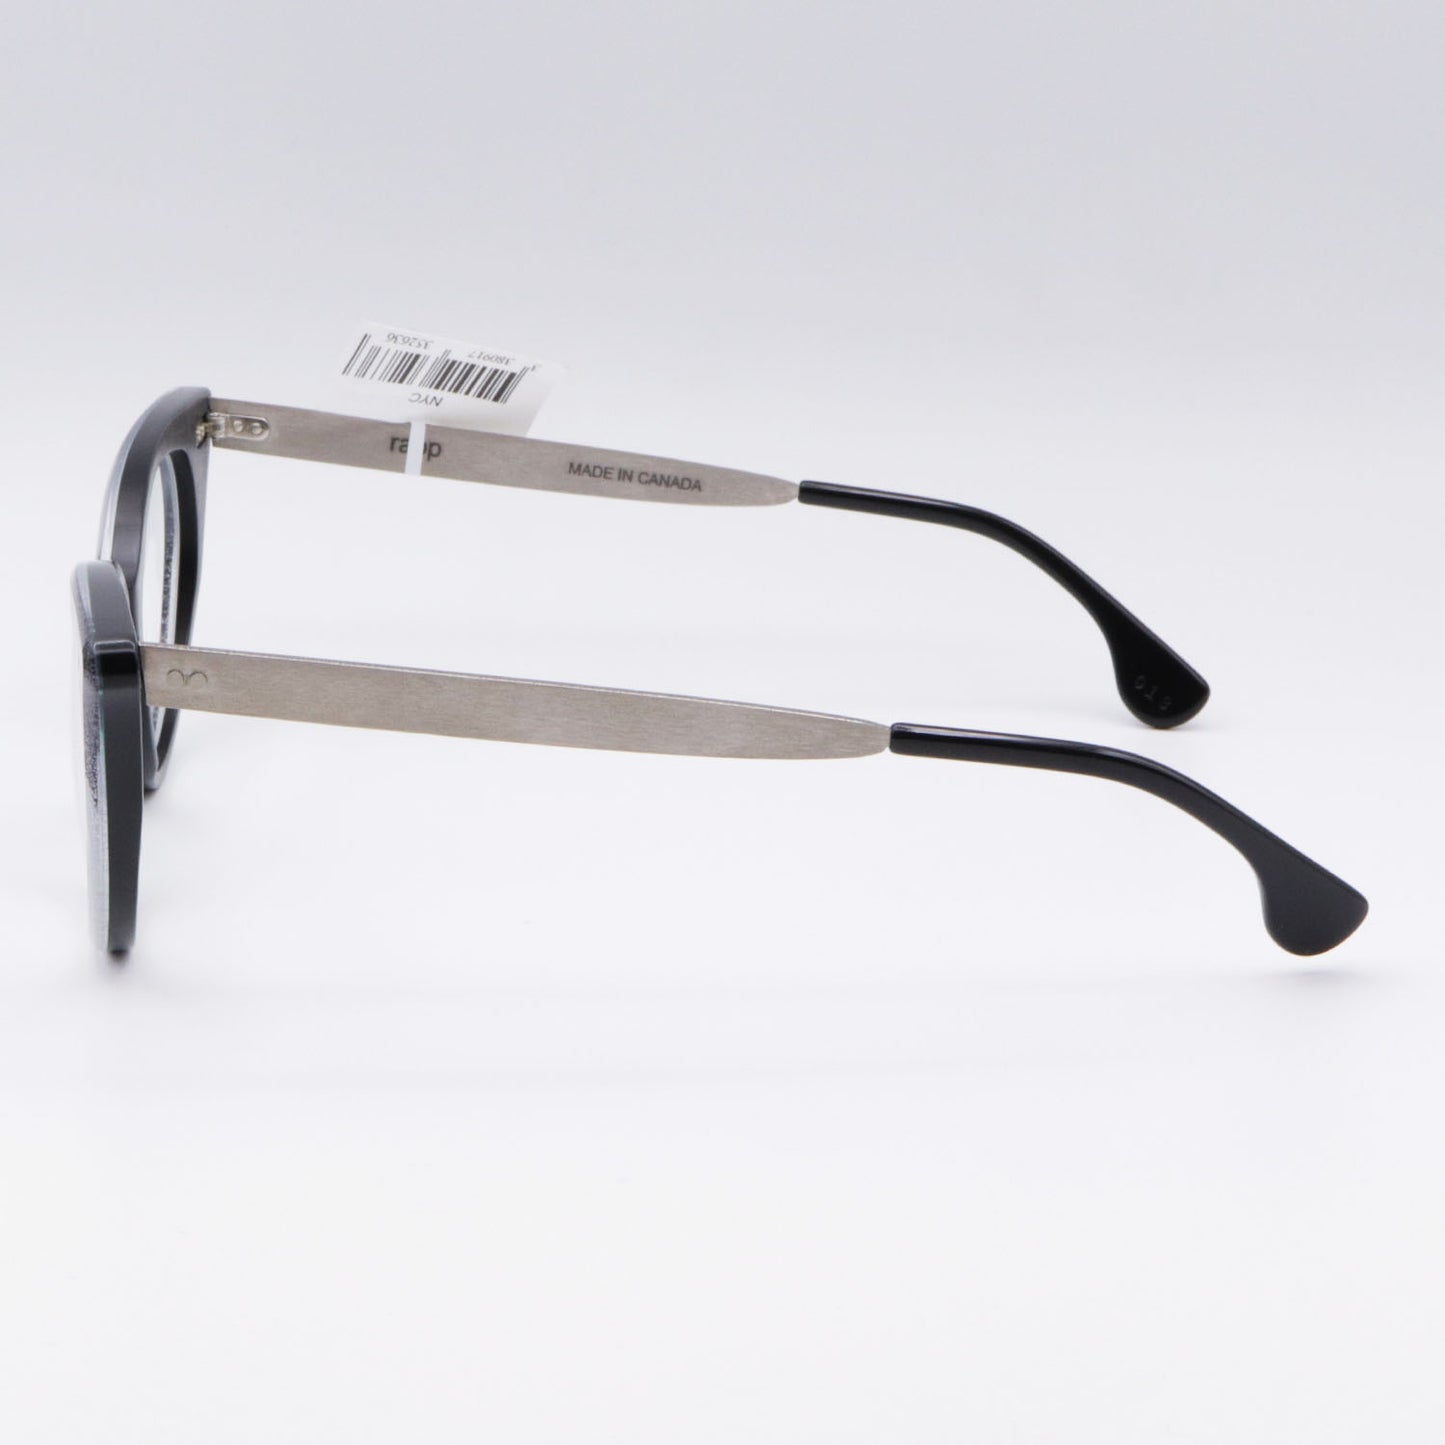 Buscher Rapp Frames Glasses Black and White